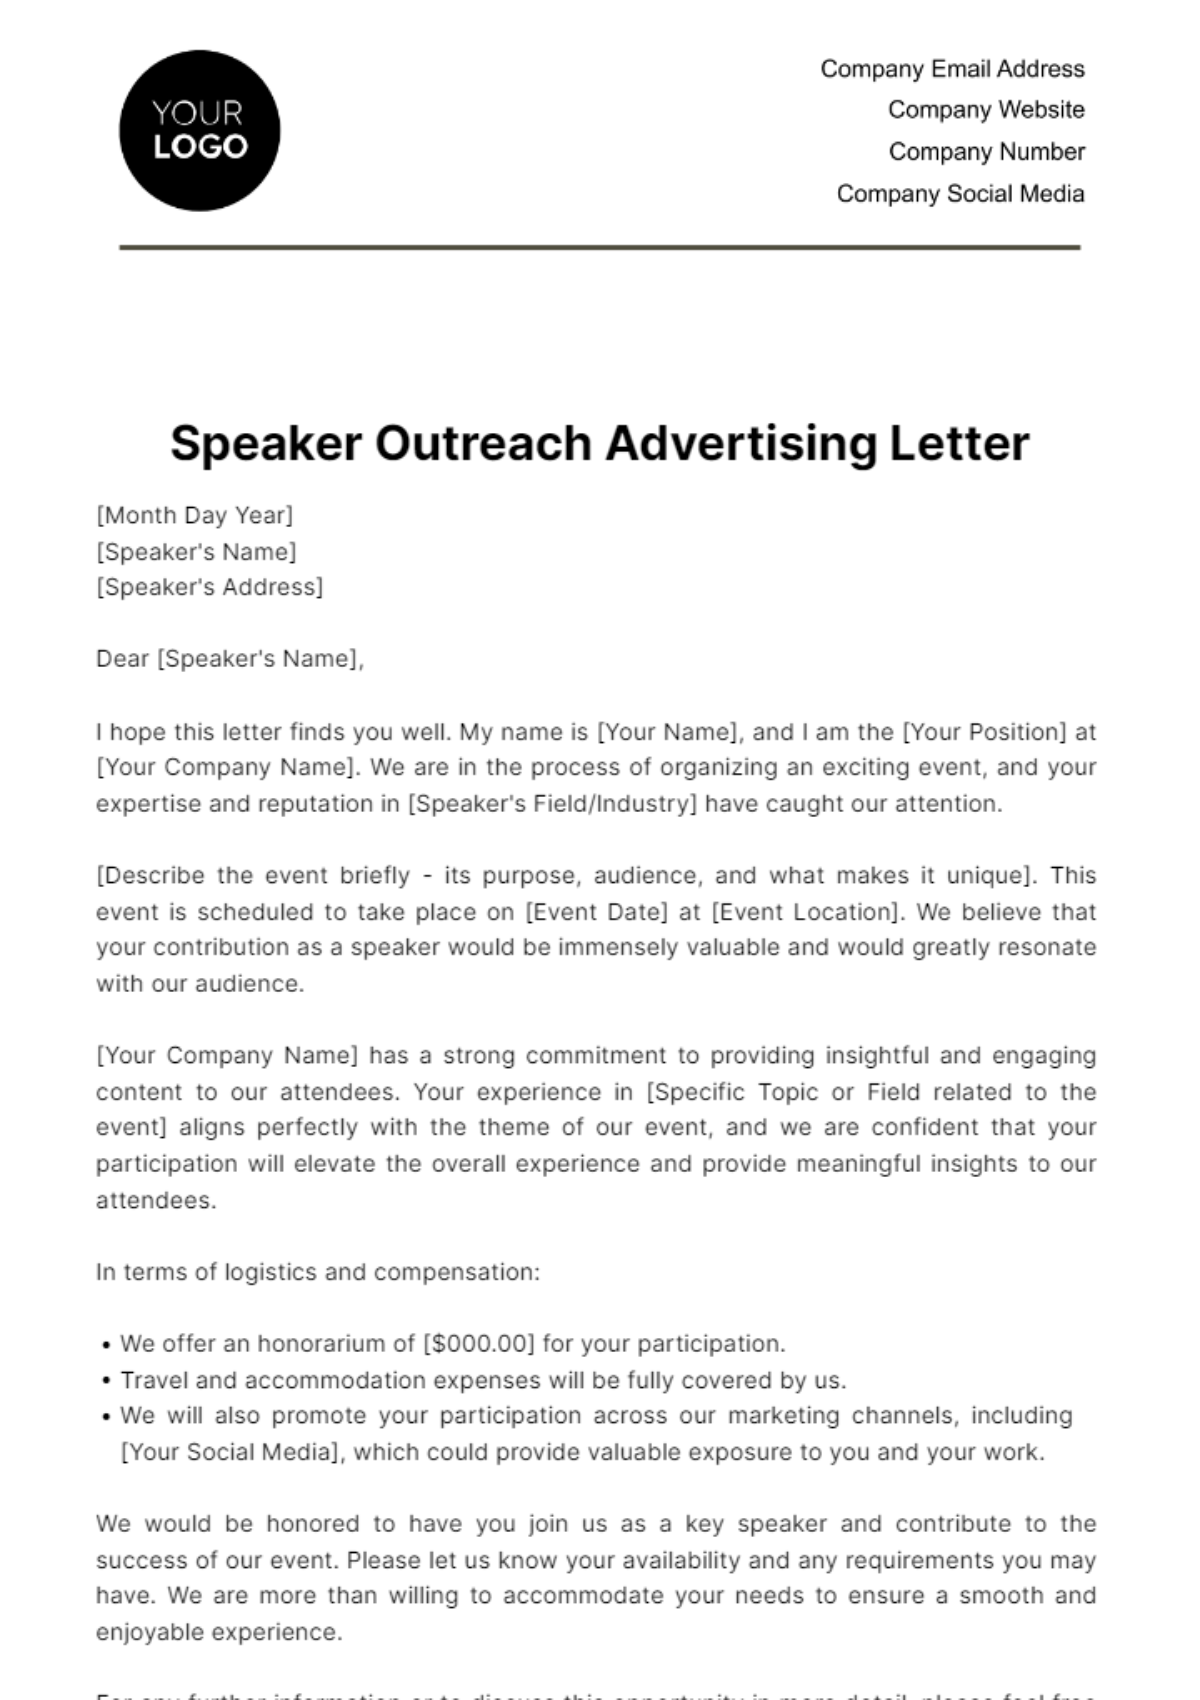 Speaker Outreach Advertising Letter Template